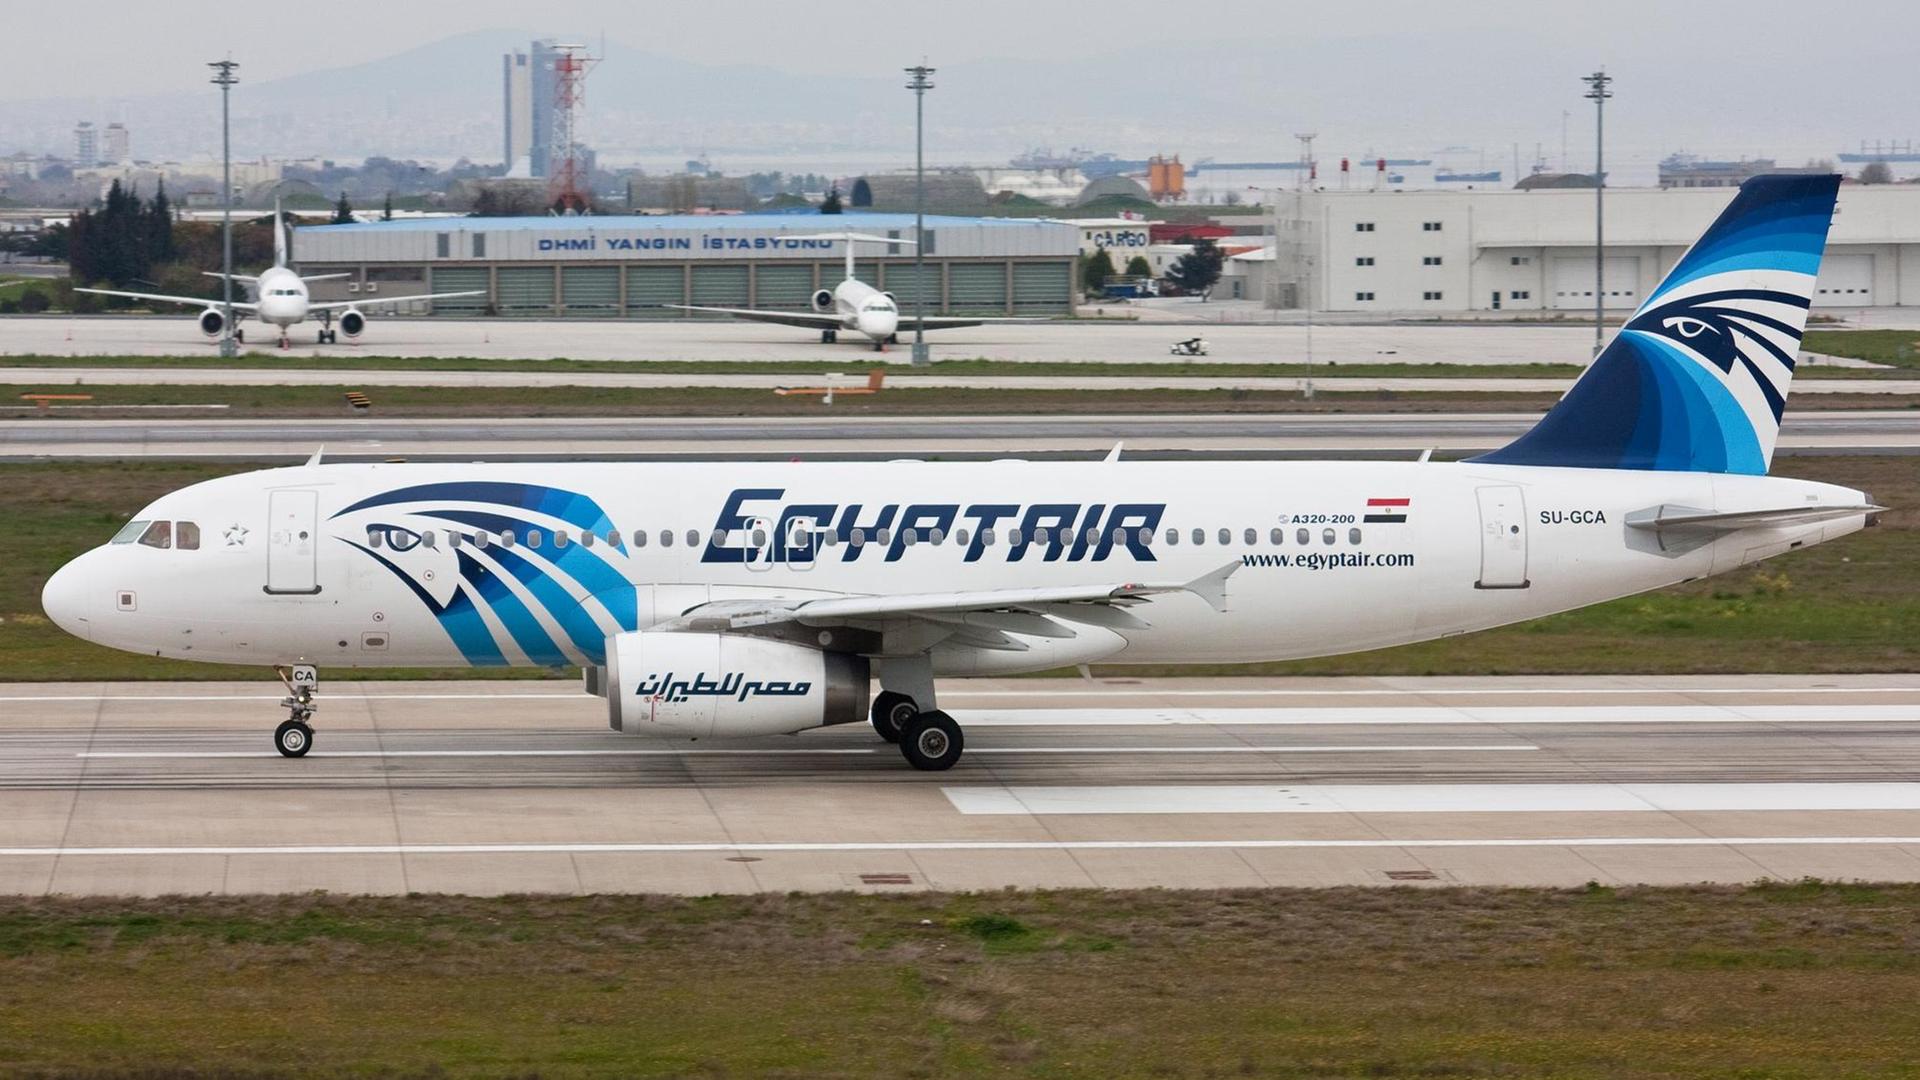 Ein Airbus A320 der Fluggesellschaft Egypt Air am Flughafen Istanbul am 24.04.2011.